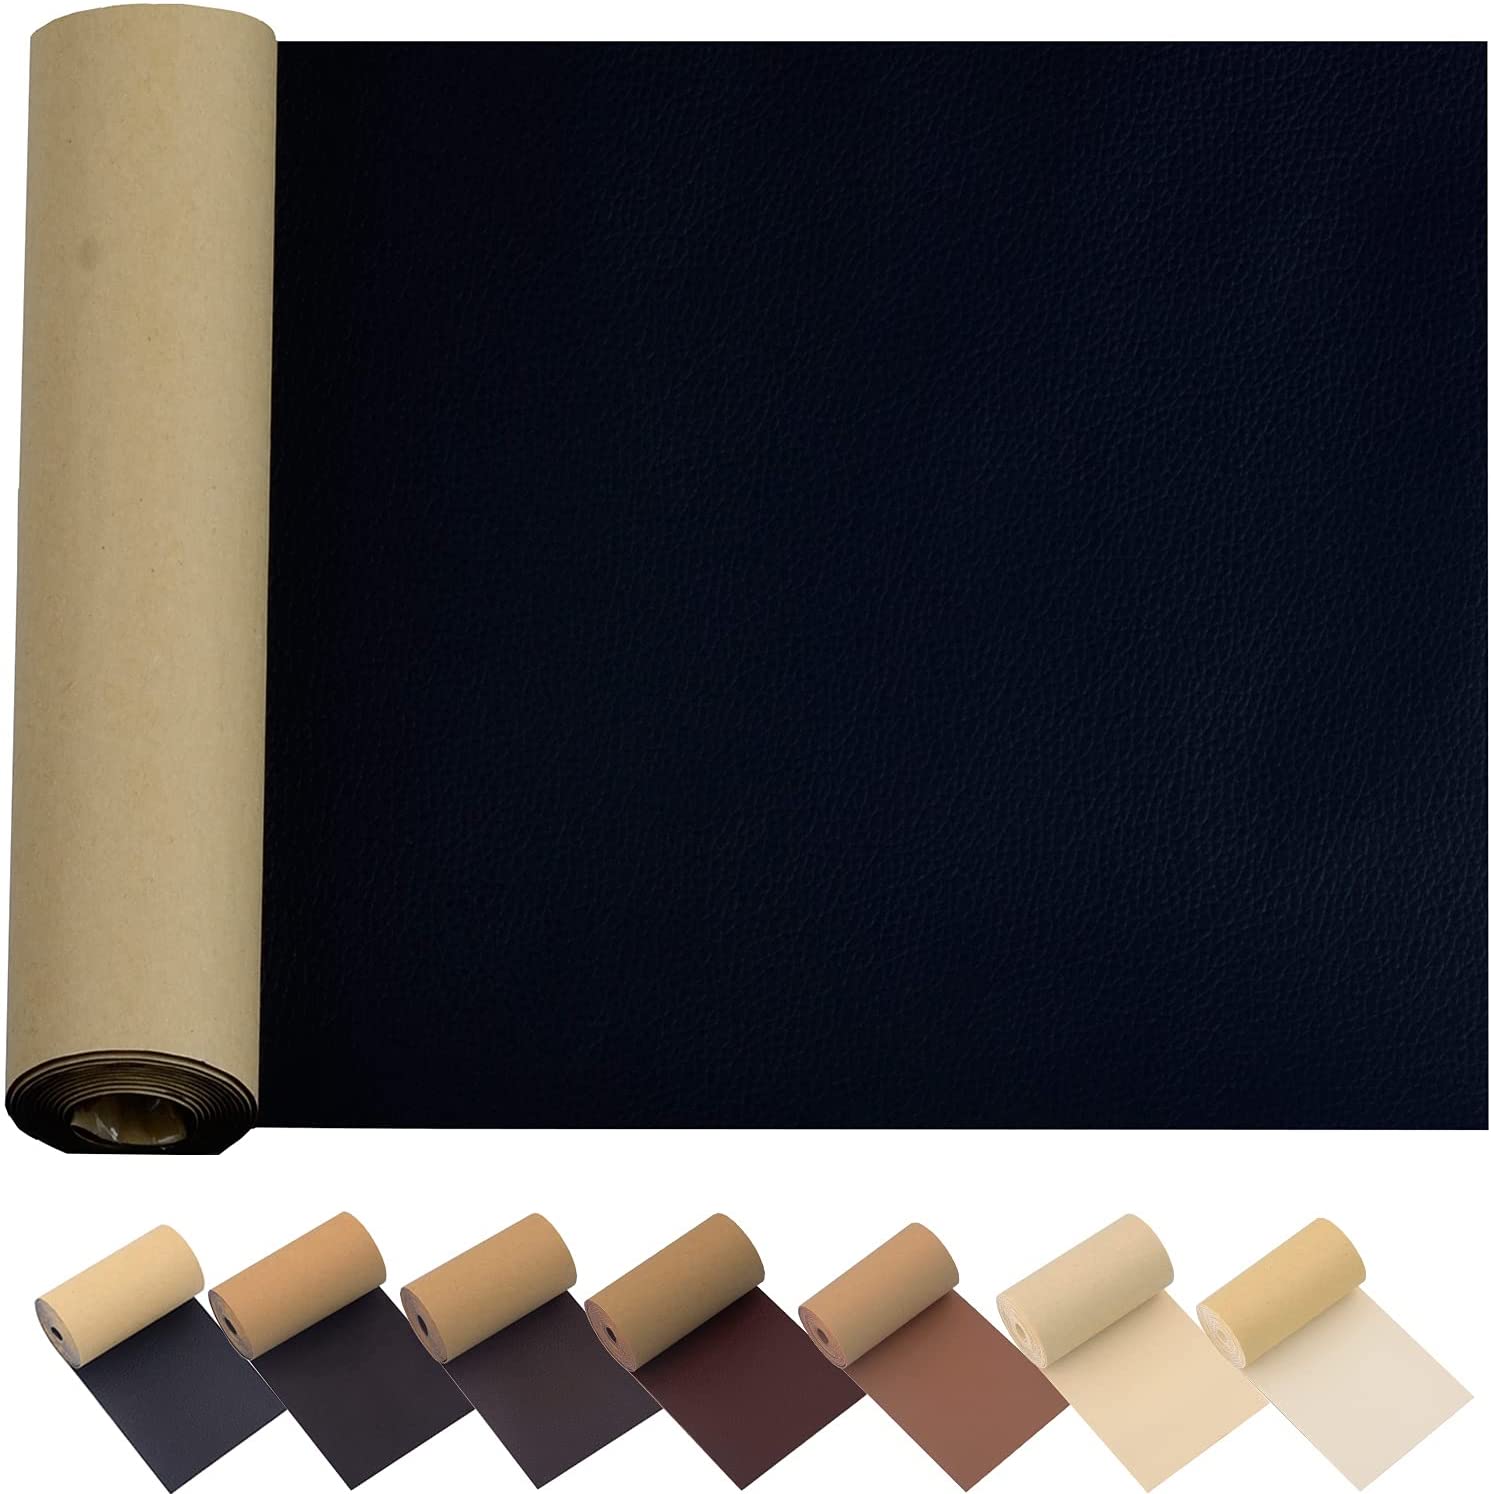 MastaPlasta Brown Self-Adhesive Patch Vinyl & Leather Couch Repair